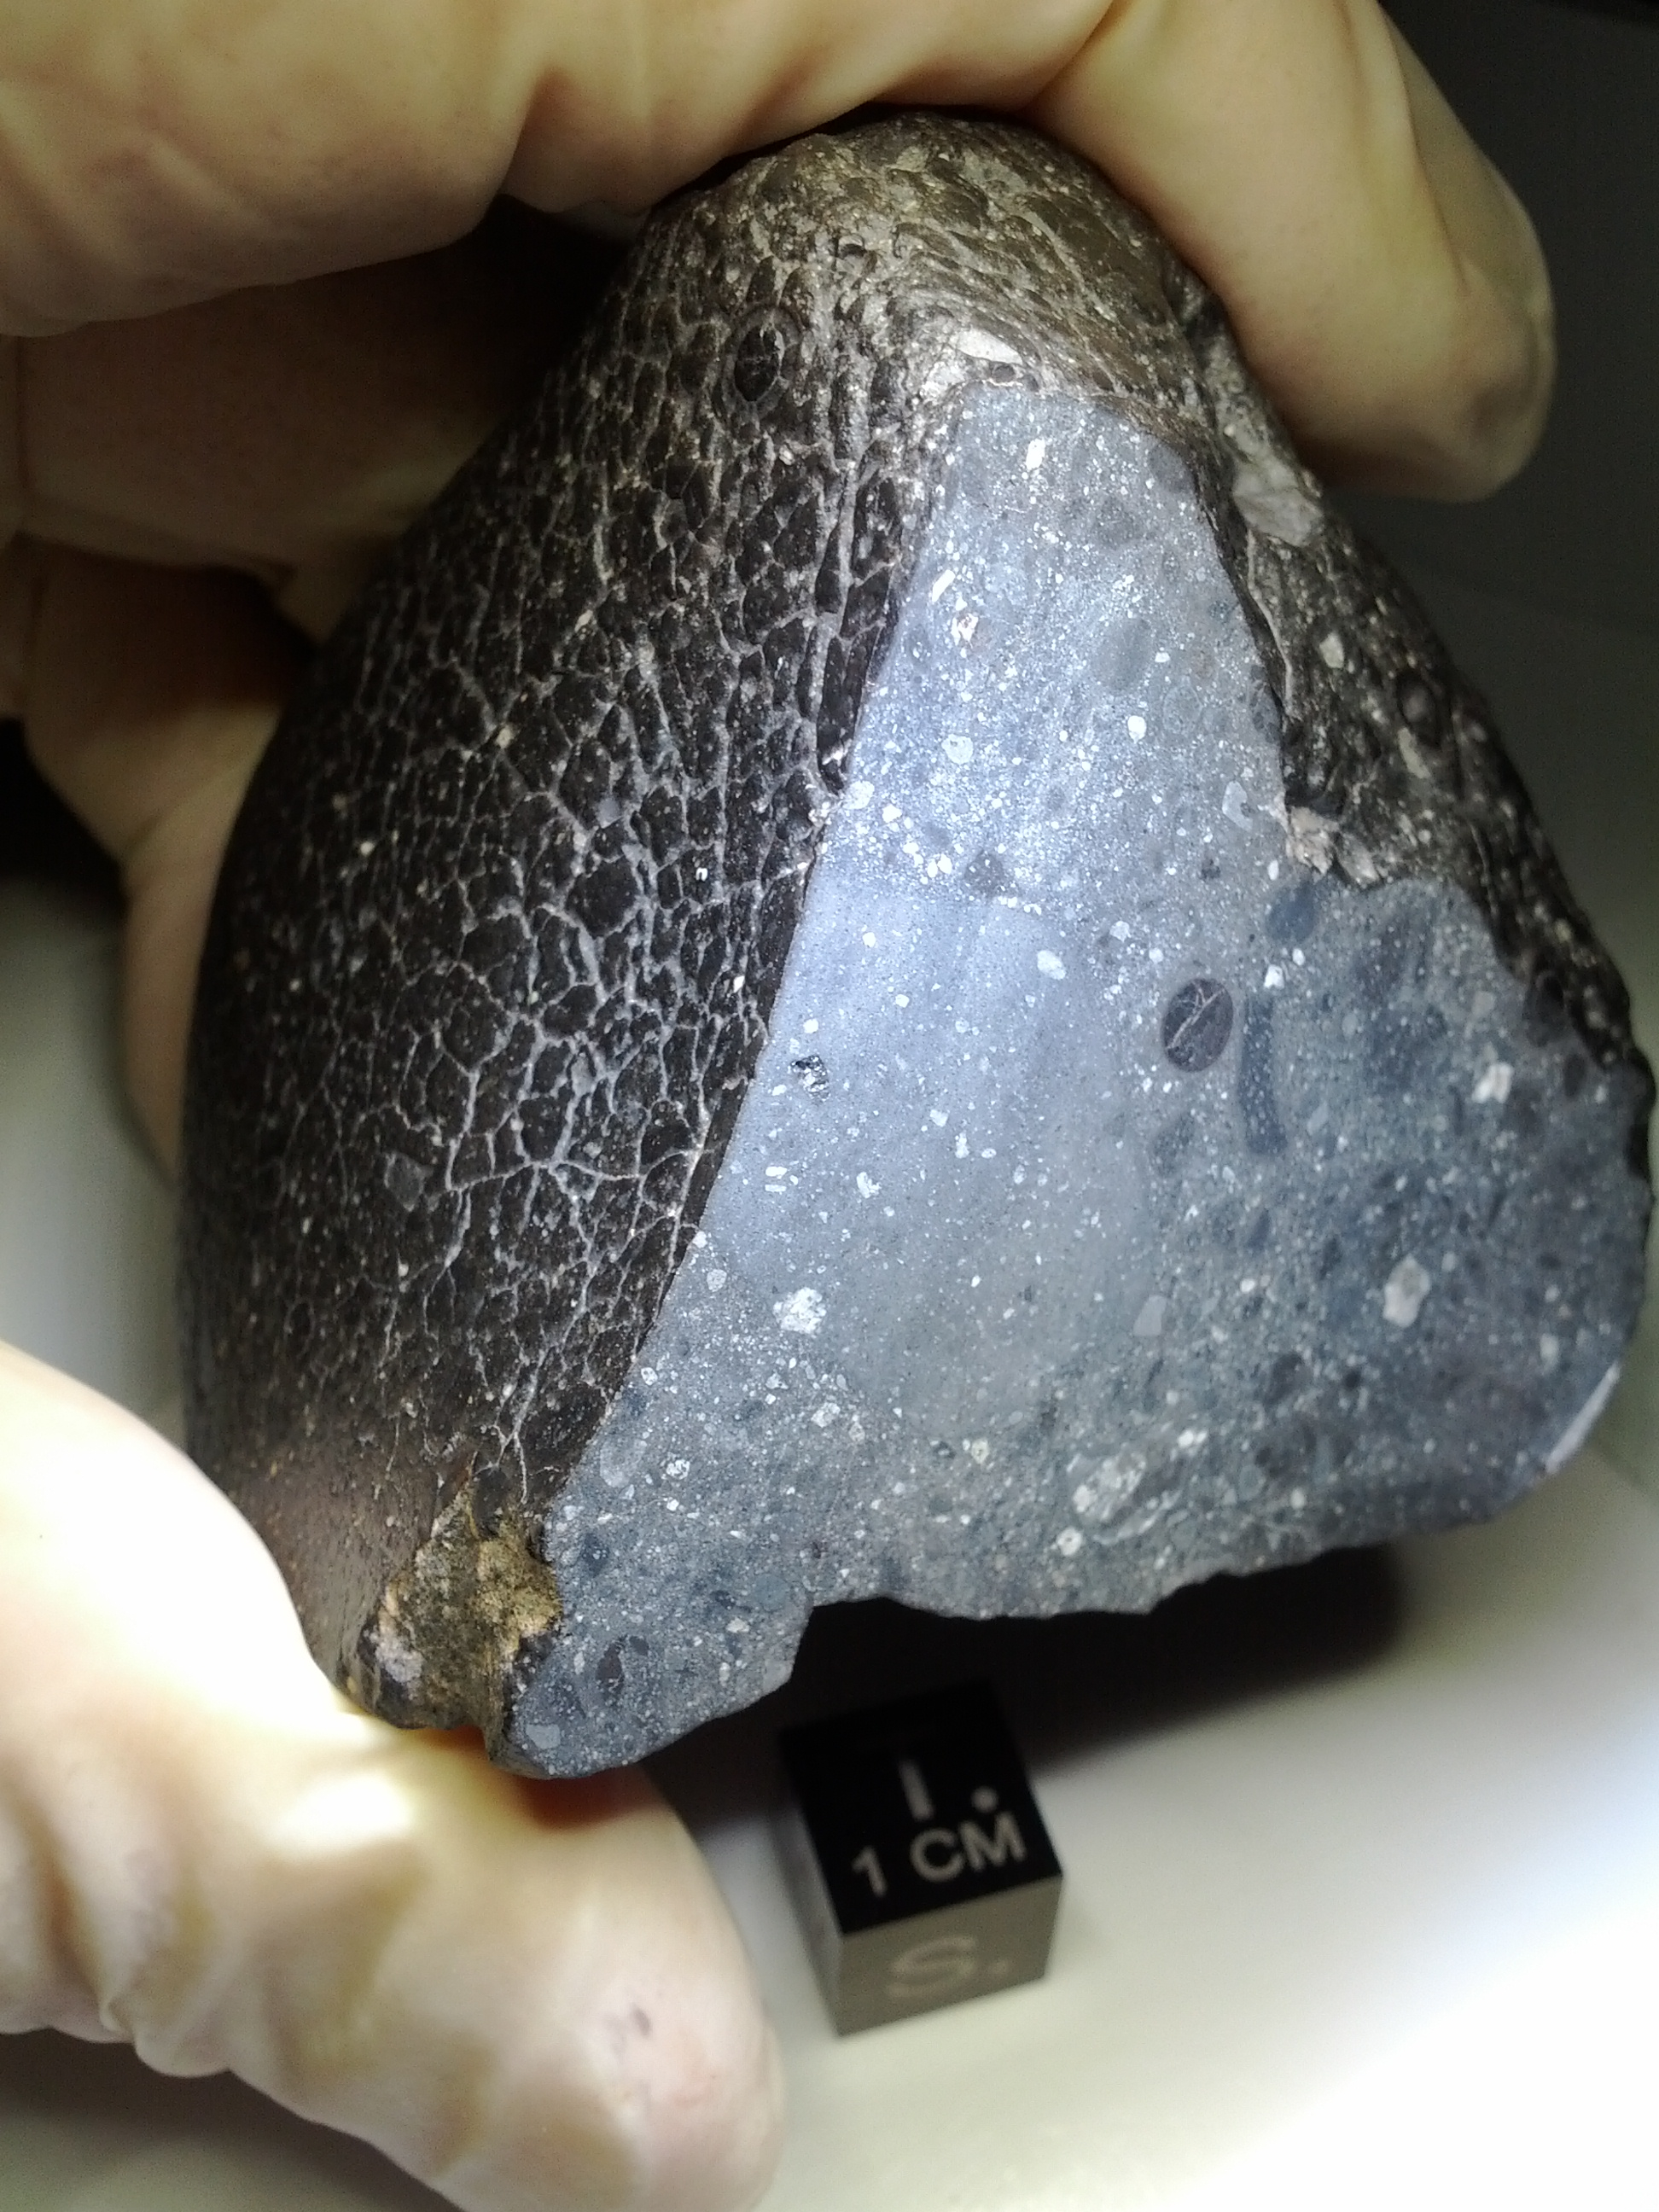 Meteorite help between finger and thumb